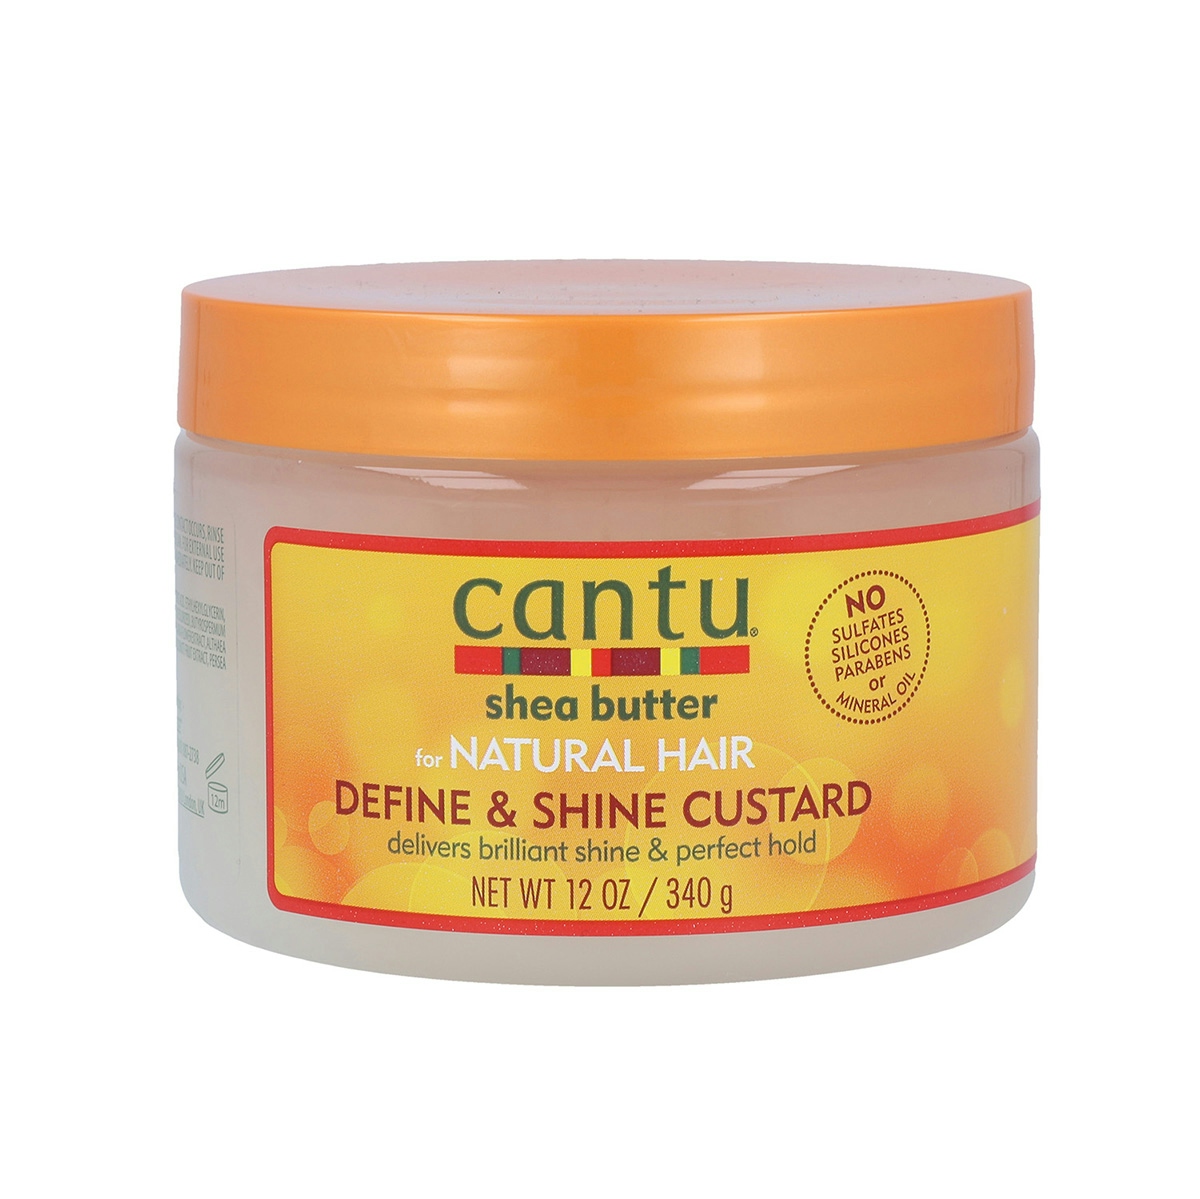 Cantu Shea Butter Natural Hair Define & Shine Custard 340g/12oz